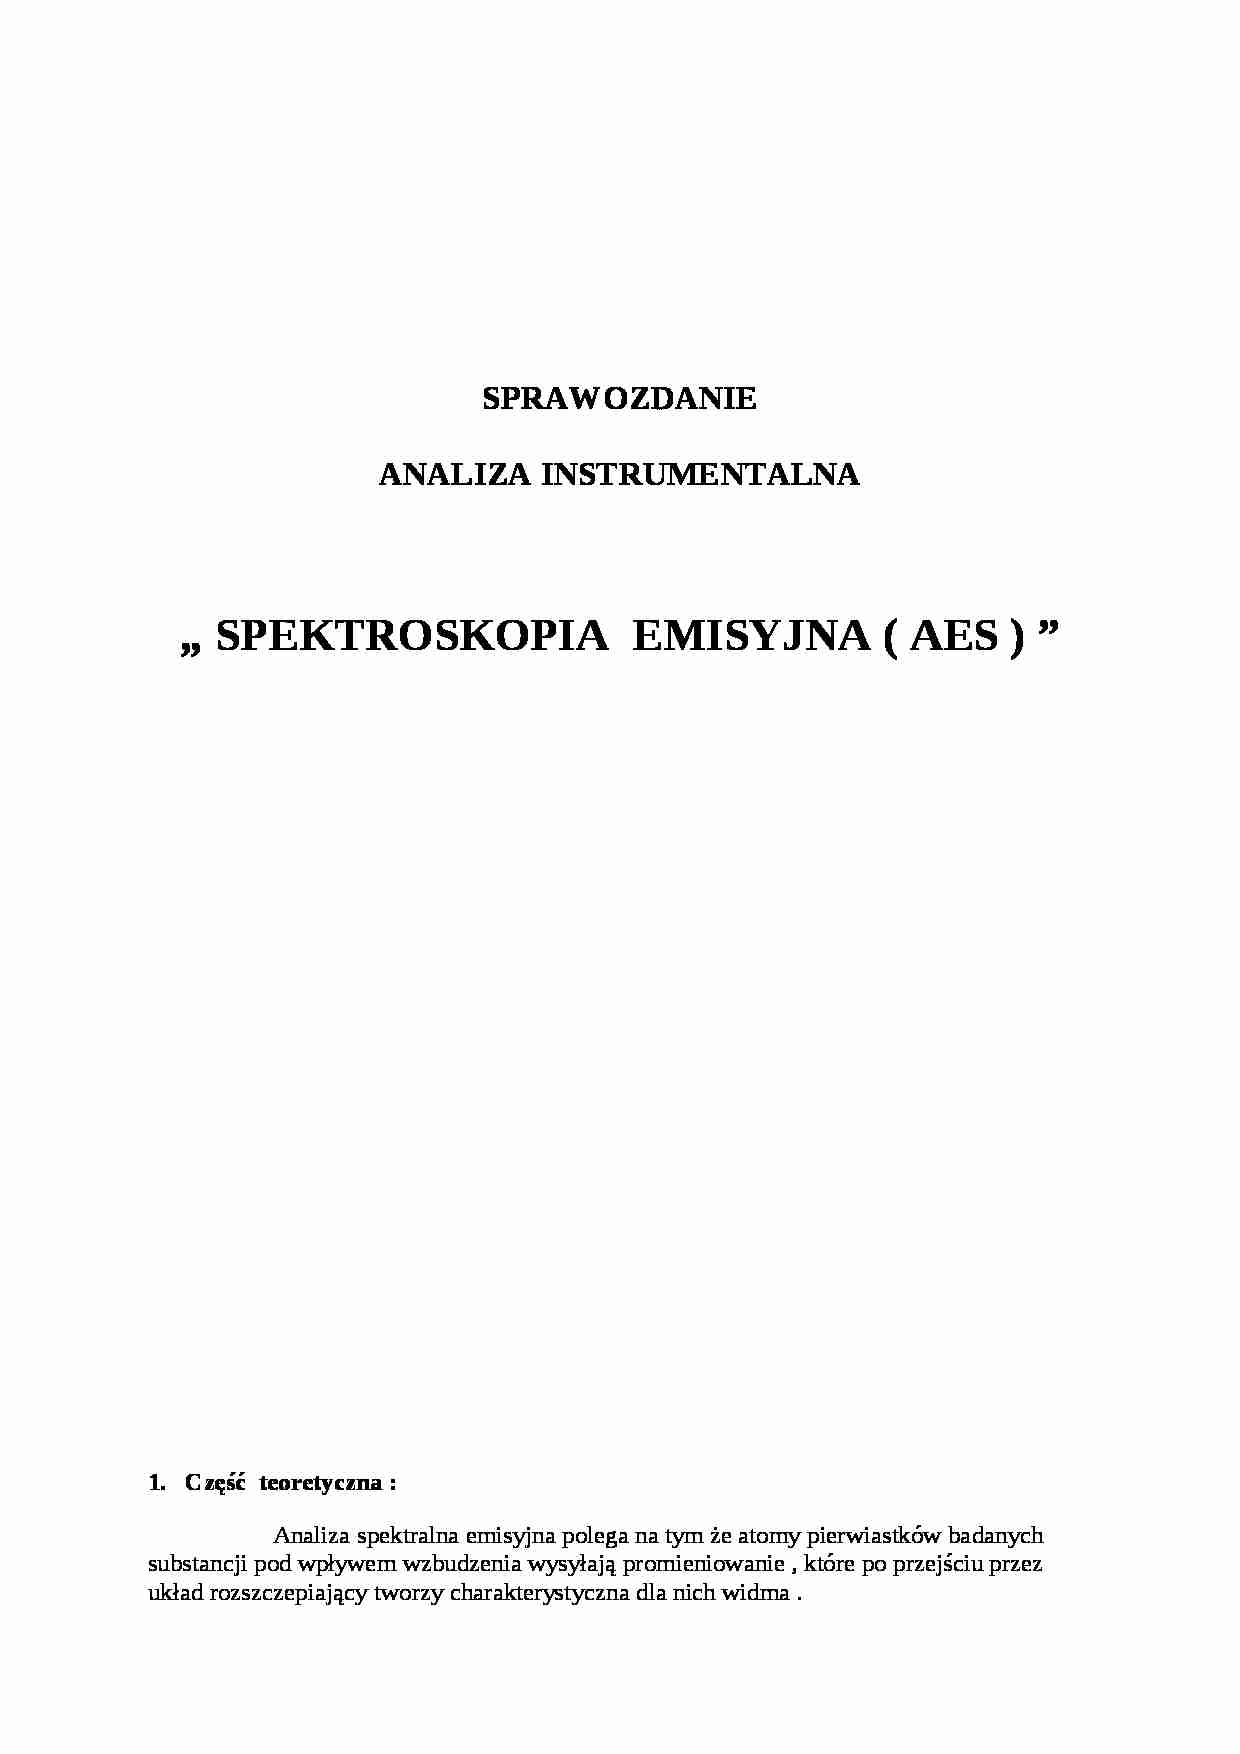 Spektroskropia emisyjna - strona 1